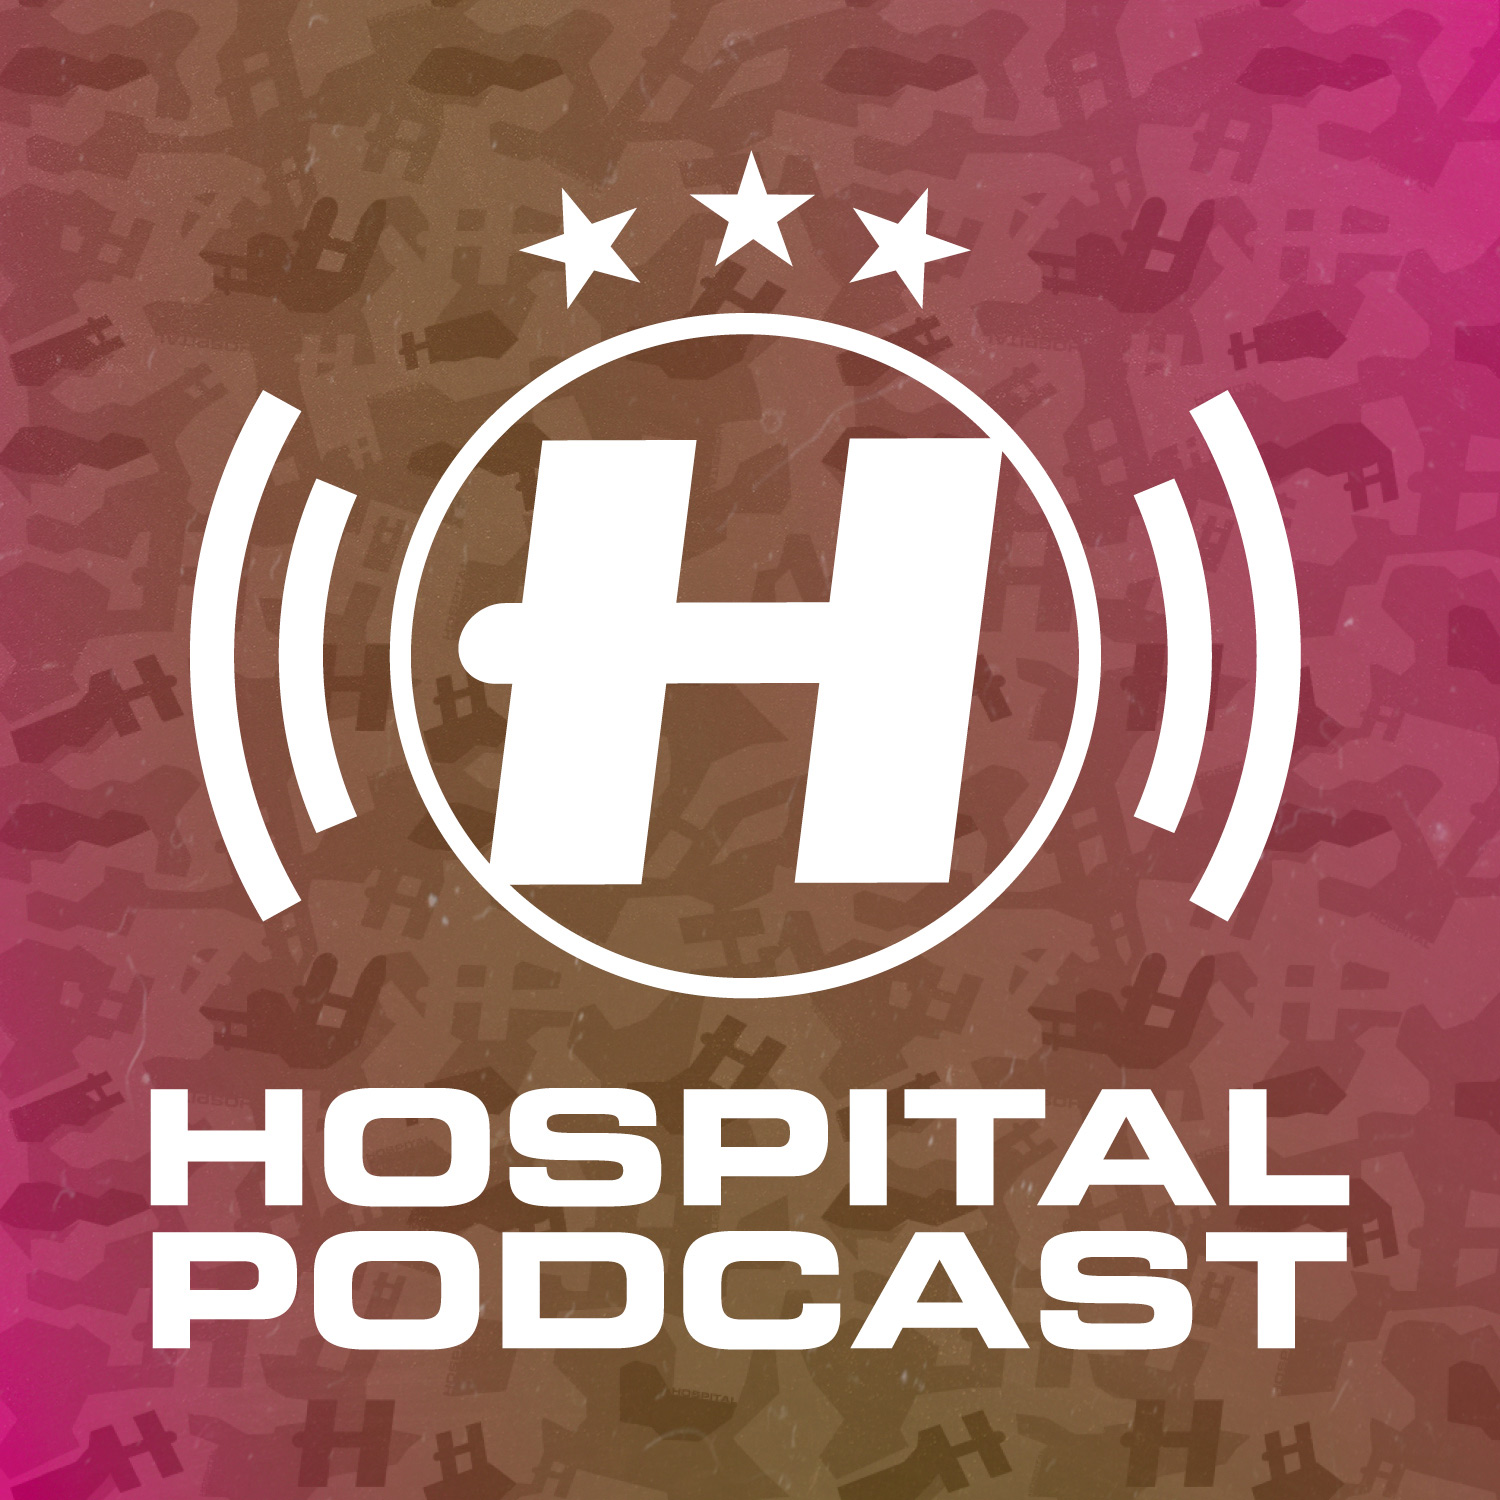 Hospital Podcast 385 with London Elektricity Artwork